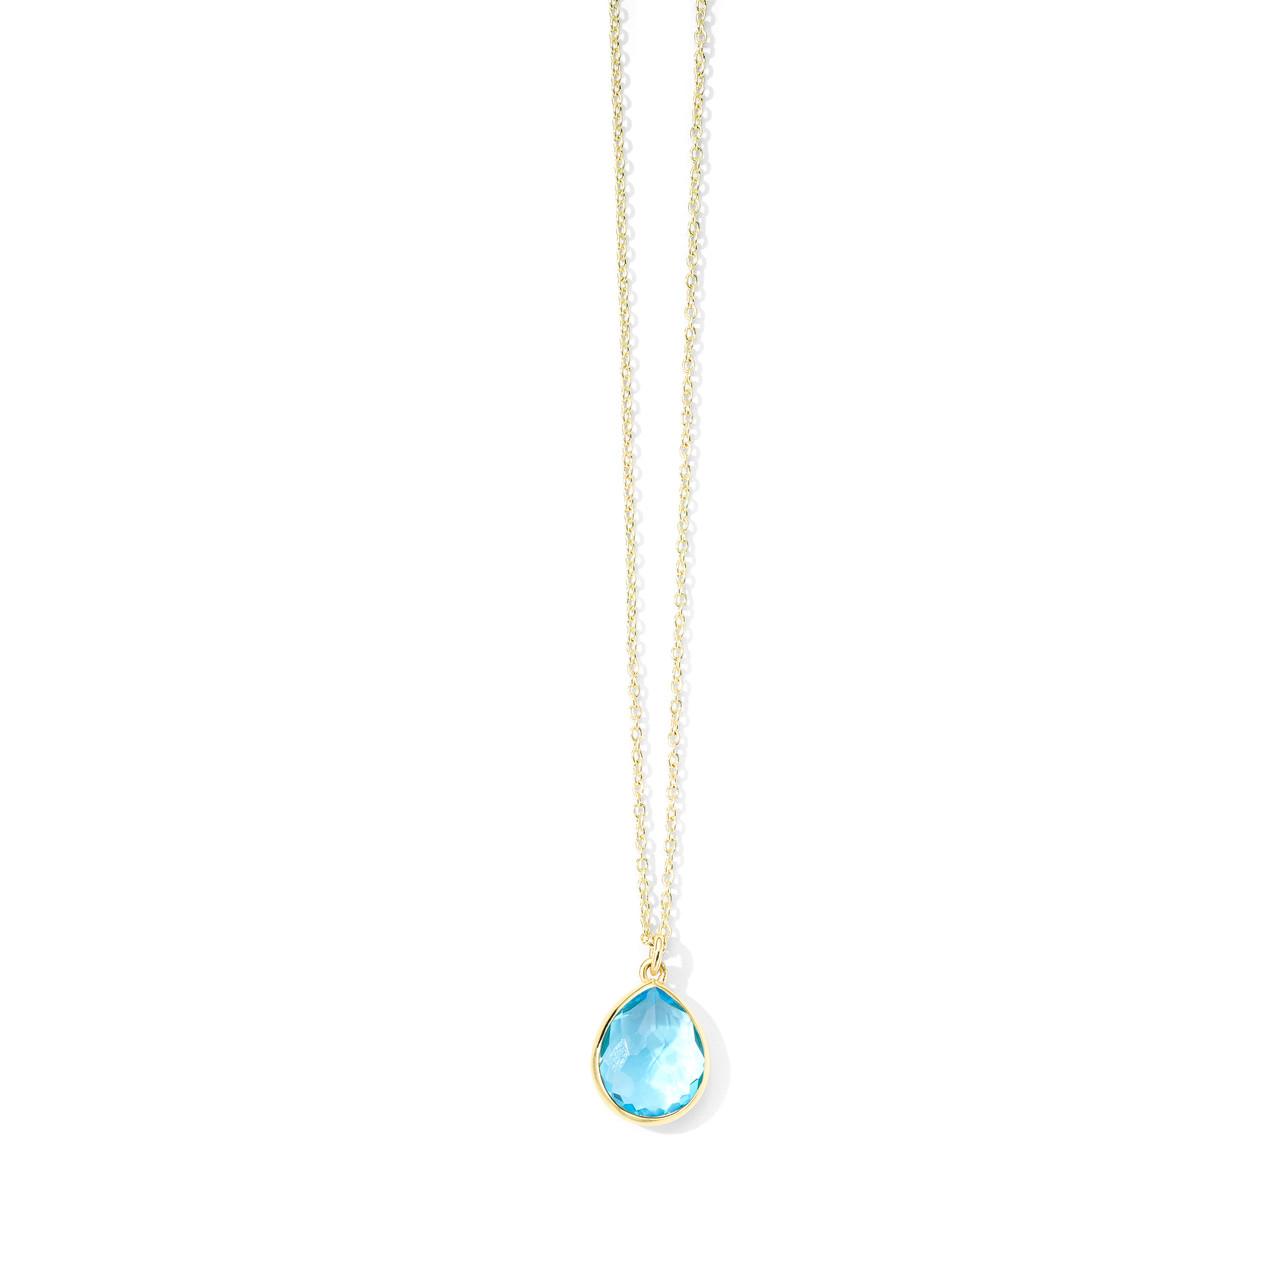 Ippolita Rock Candy Mini Teardrop 18k Gold Pendant Necklace with Blue Topaz 0